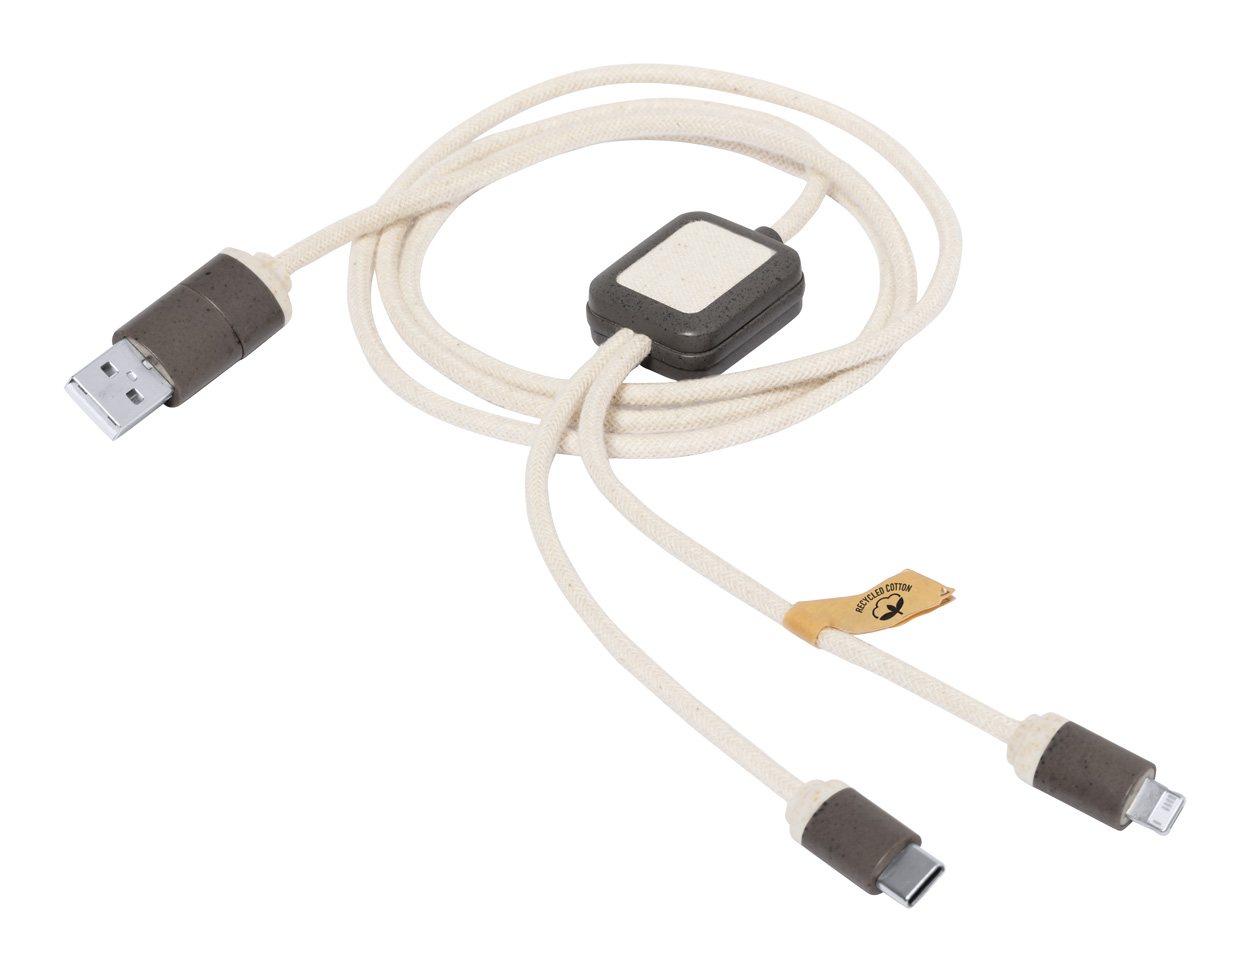 Promo Seymur USB charger cable